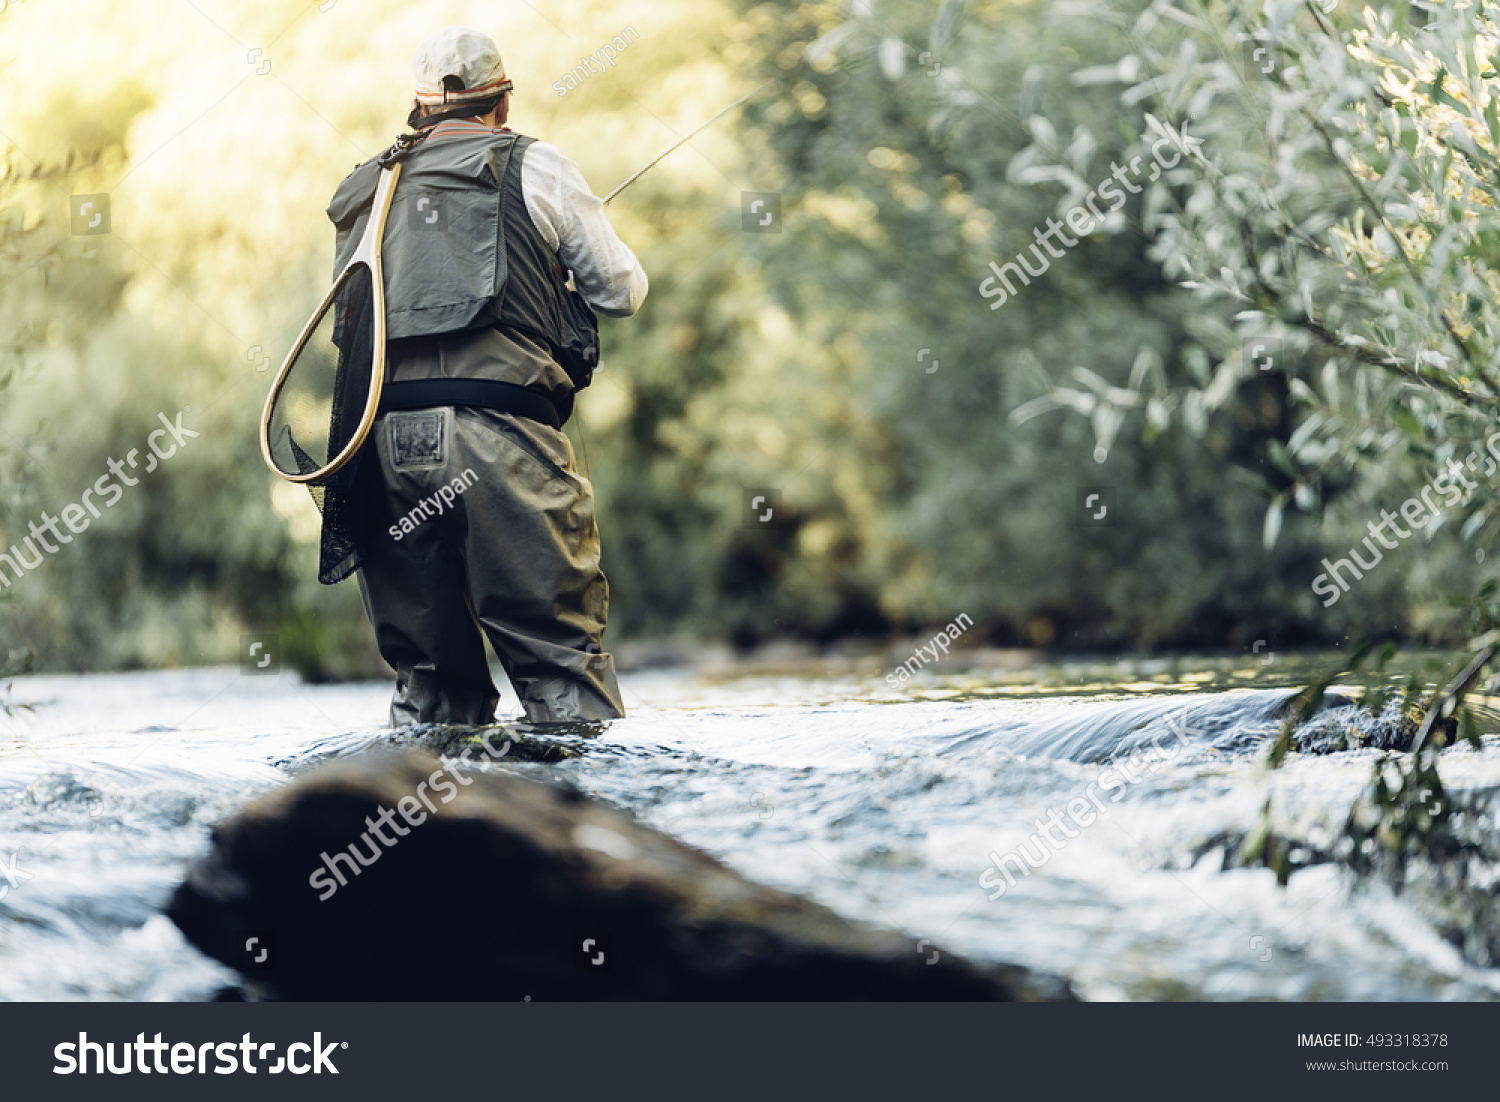 Fly fisherman using flyfishing rod in beautiful river. #493318378